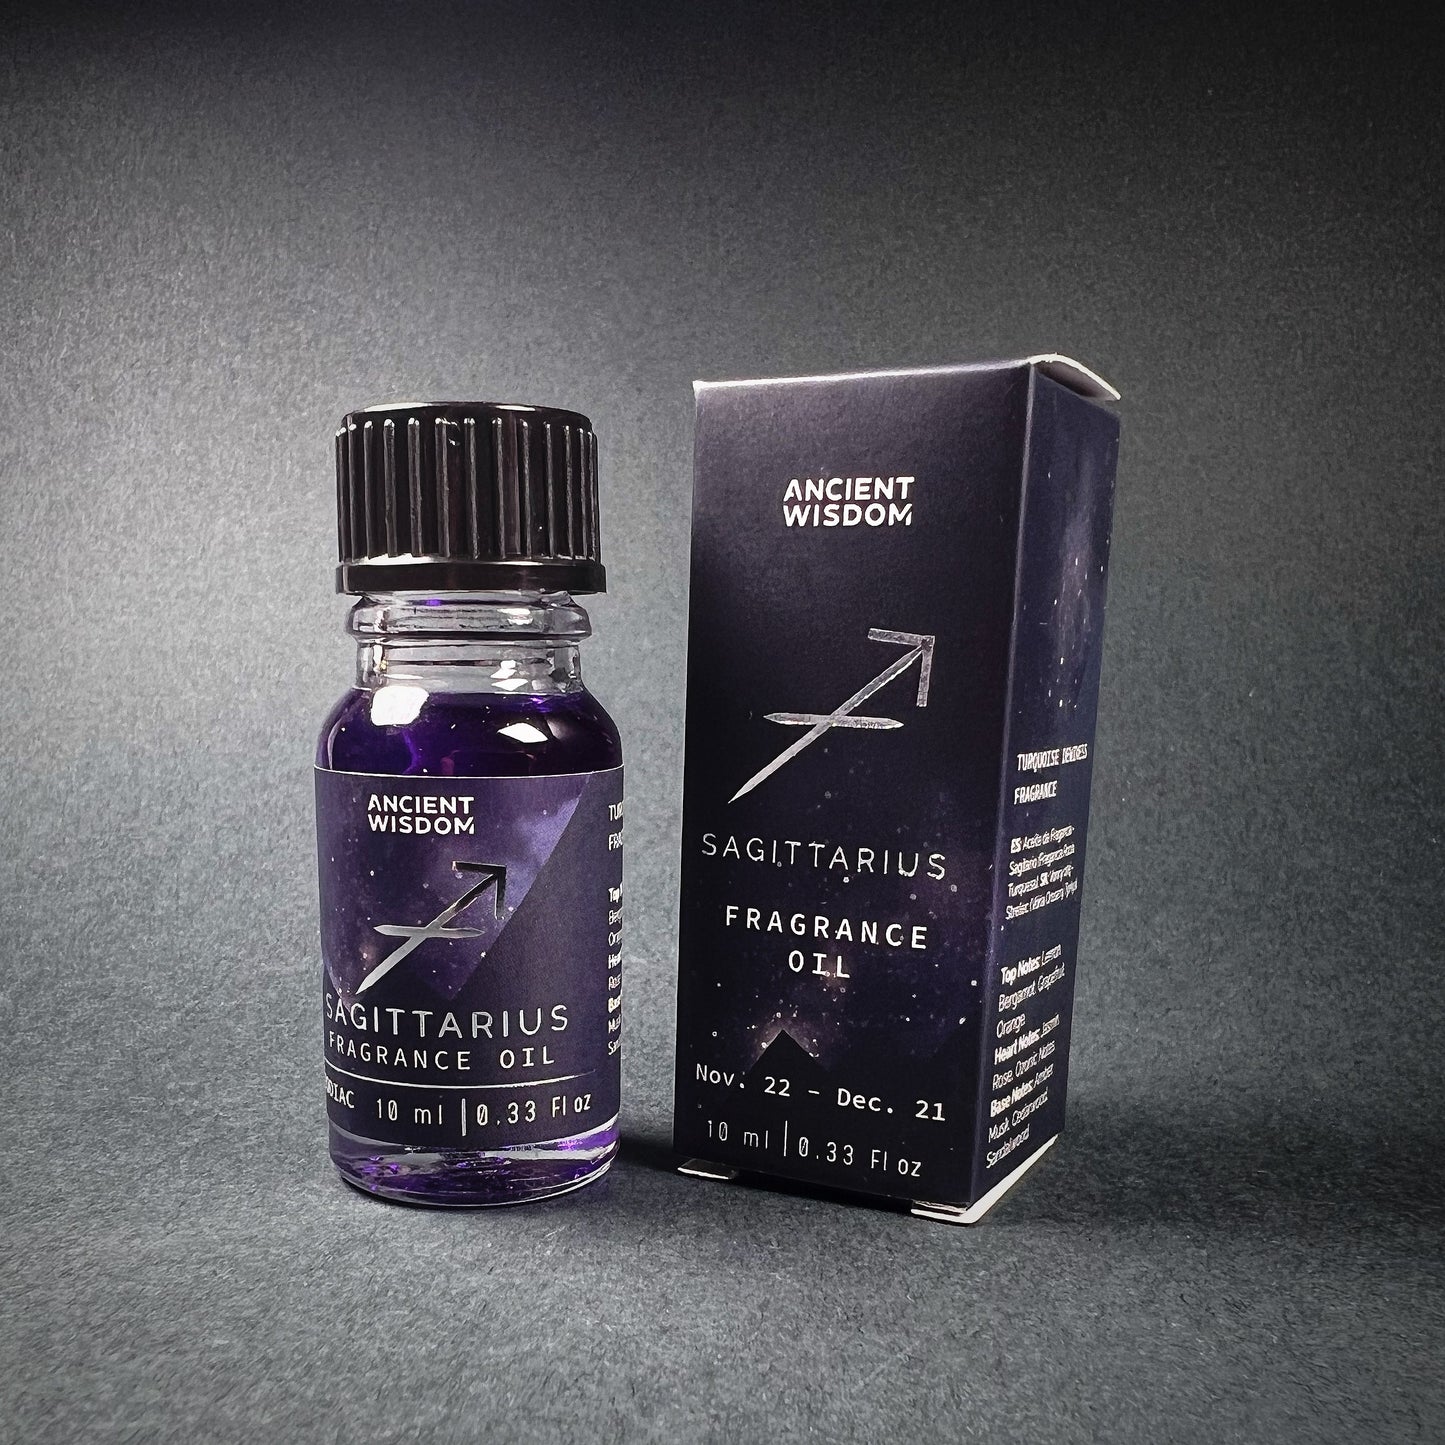 Zodiac fragrance oils